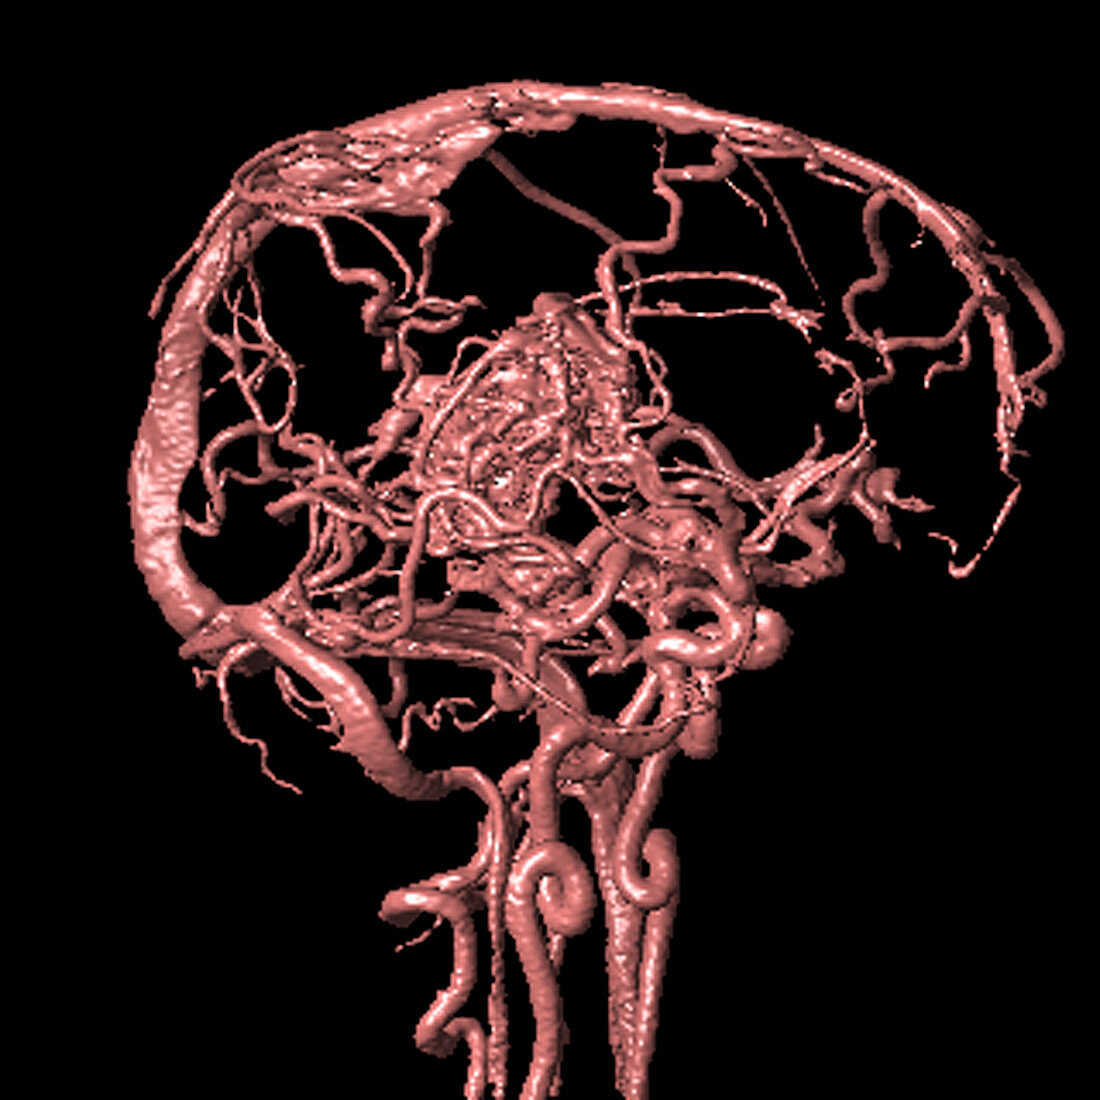 Brain arteriovenous malformation,MRA